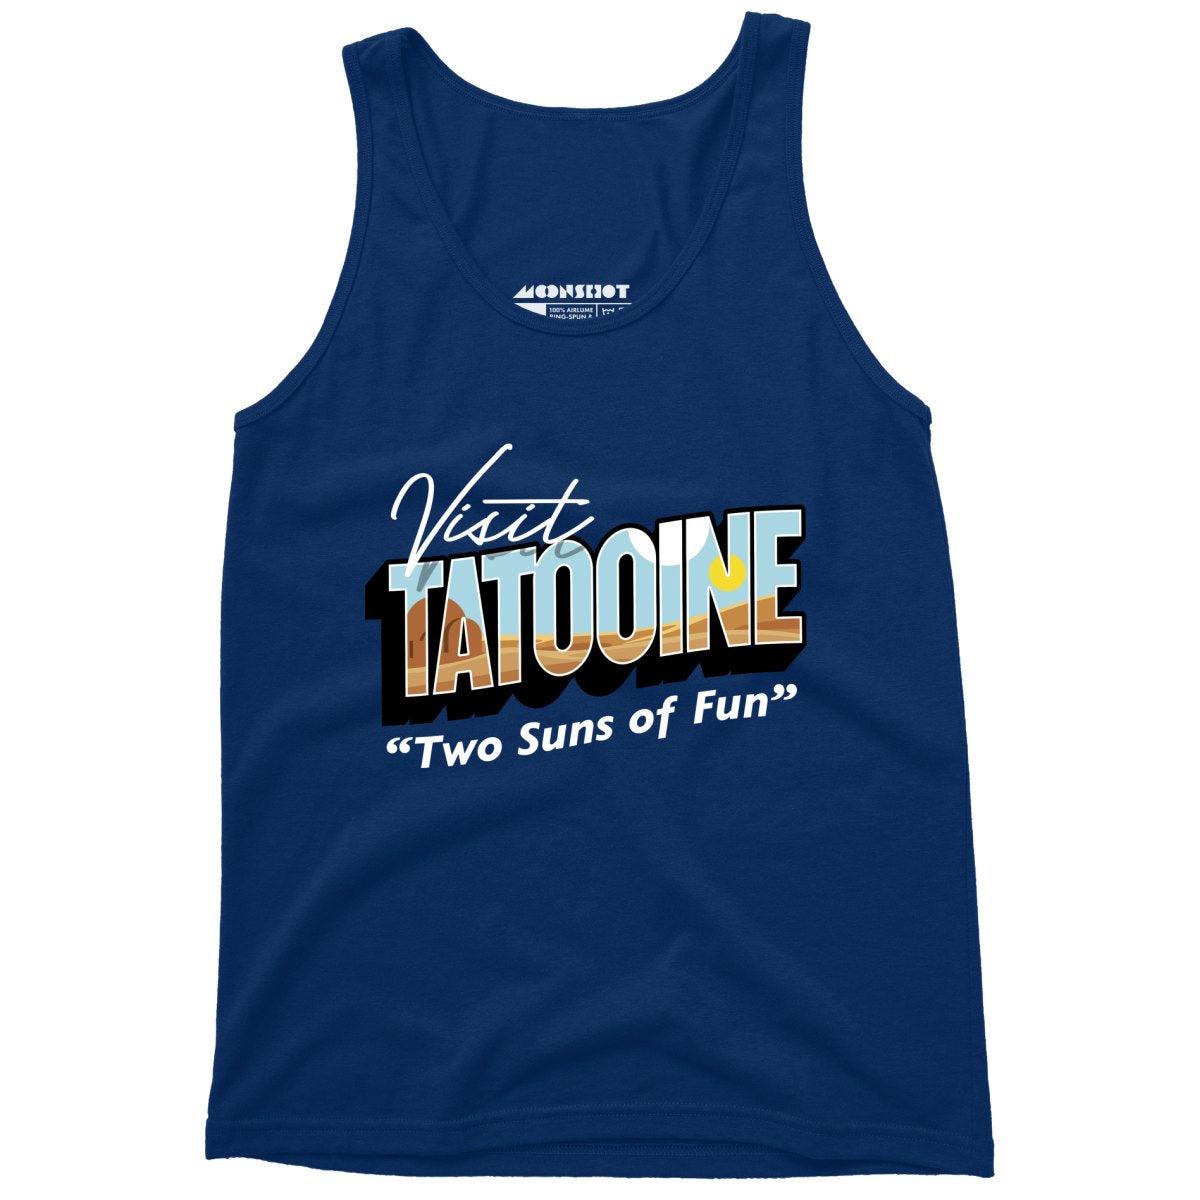 Visit Tatooine - Two Suns of Fun - Unisex Tank Top